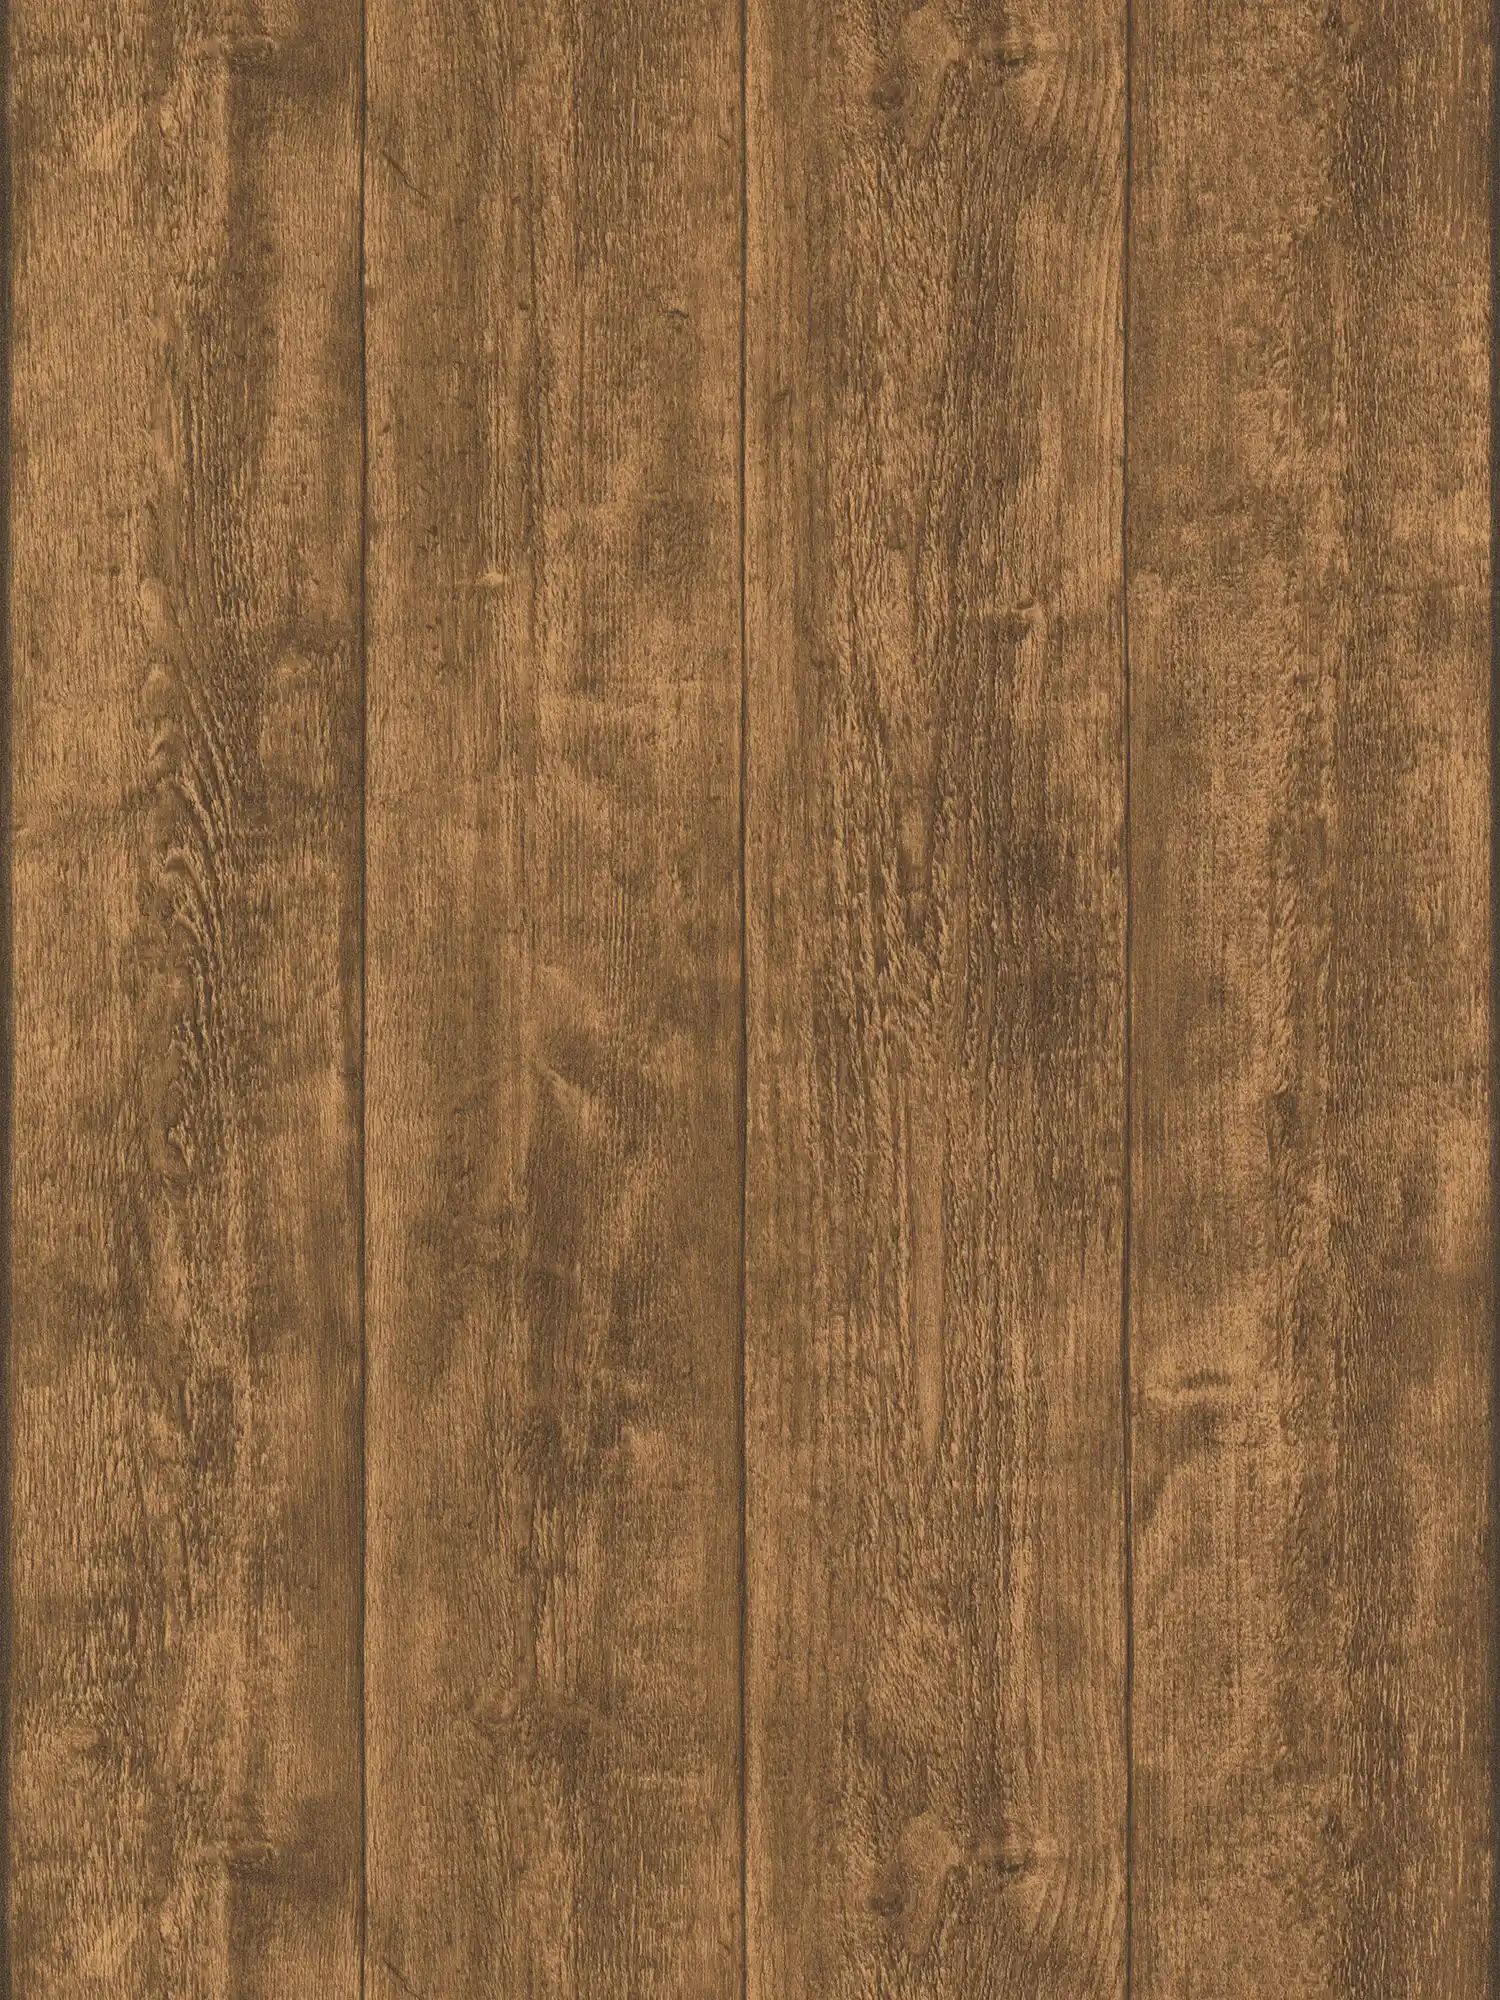 Holzoptik Vliestapete mit rustikaler Maserung – Braun
